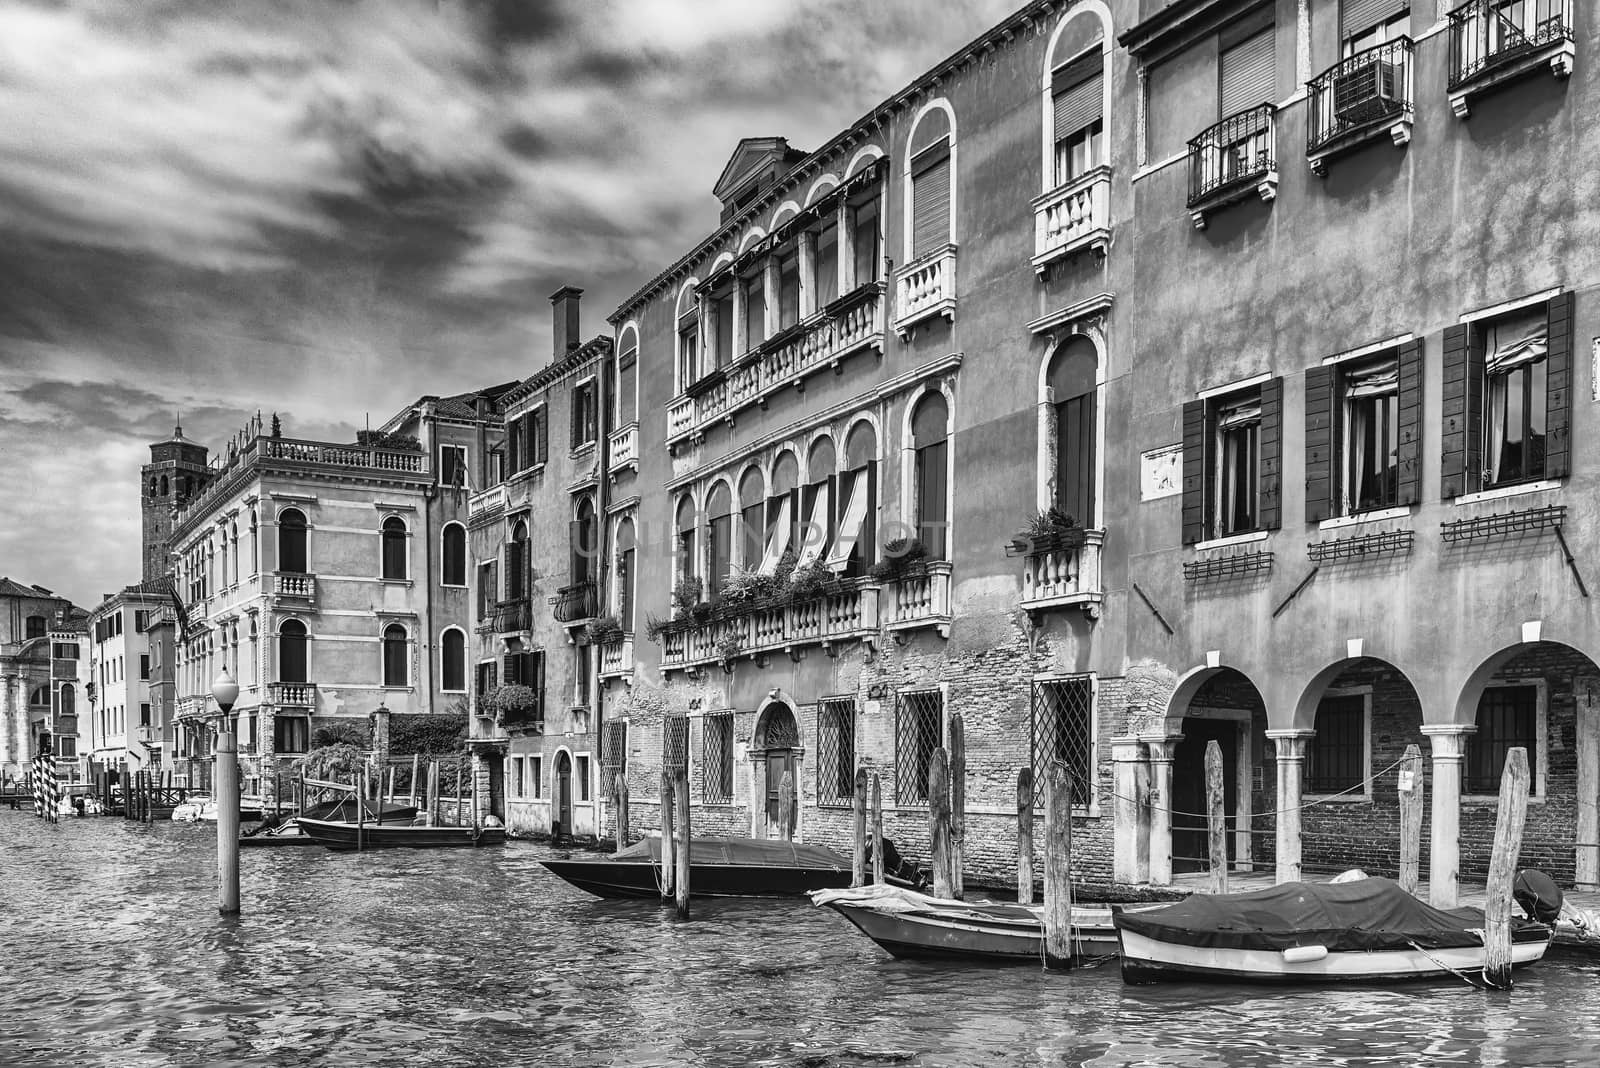 Scenic architecture along the Grand Canal in Venice, Italy by marcorubino